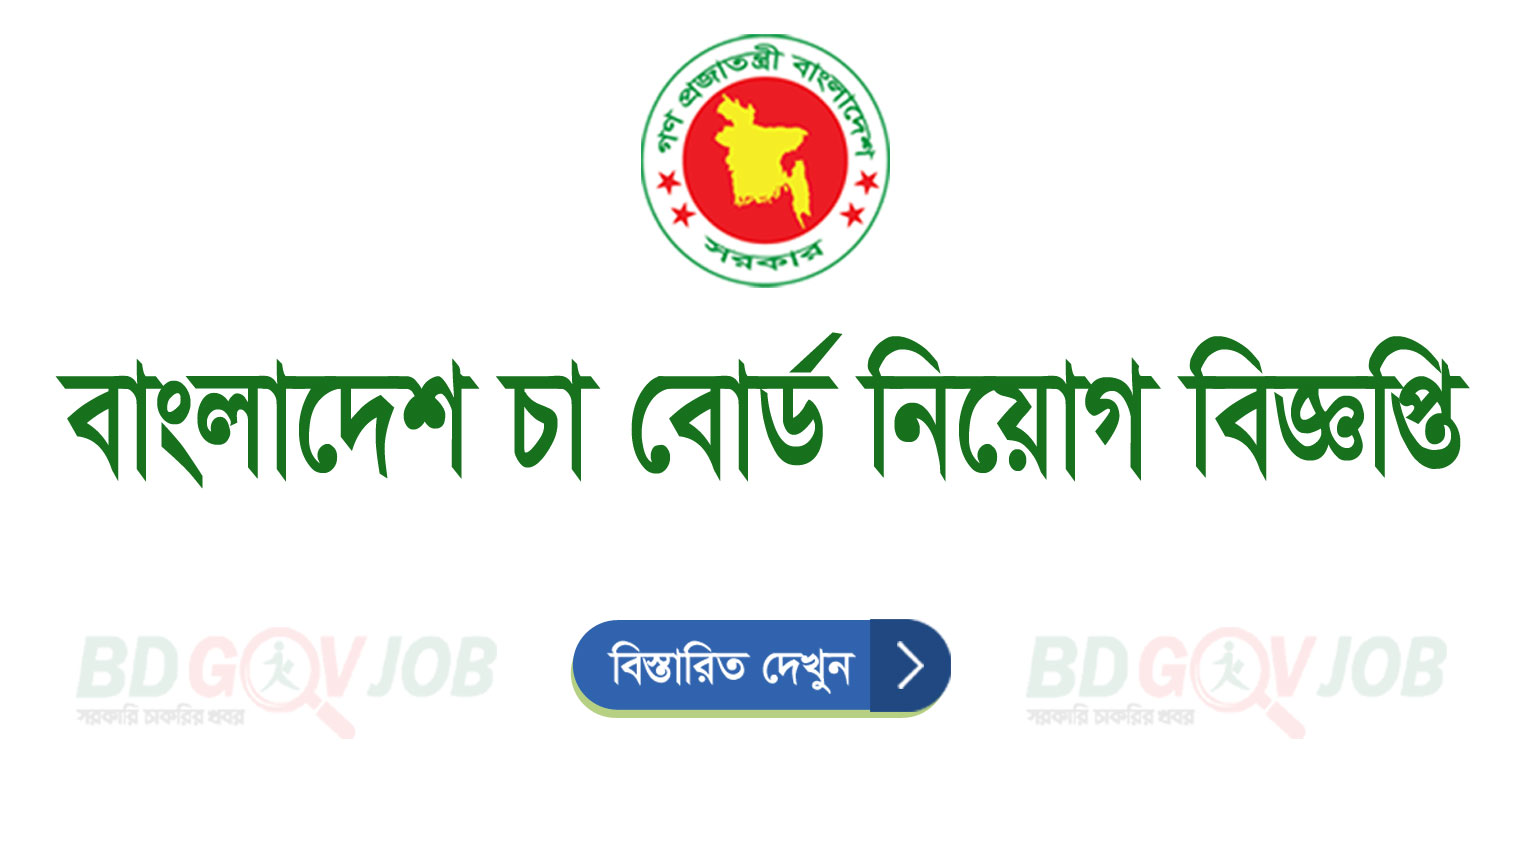 Bangladesh Tea Board Job Circular